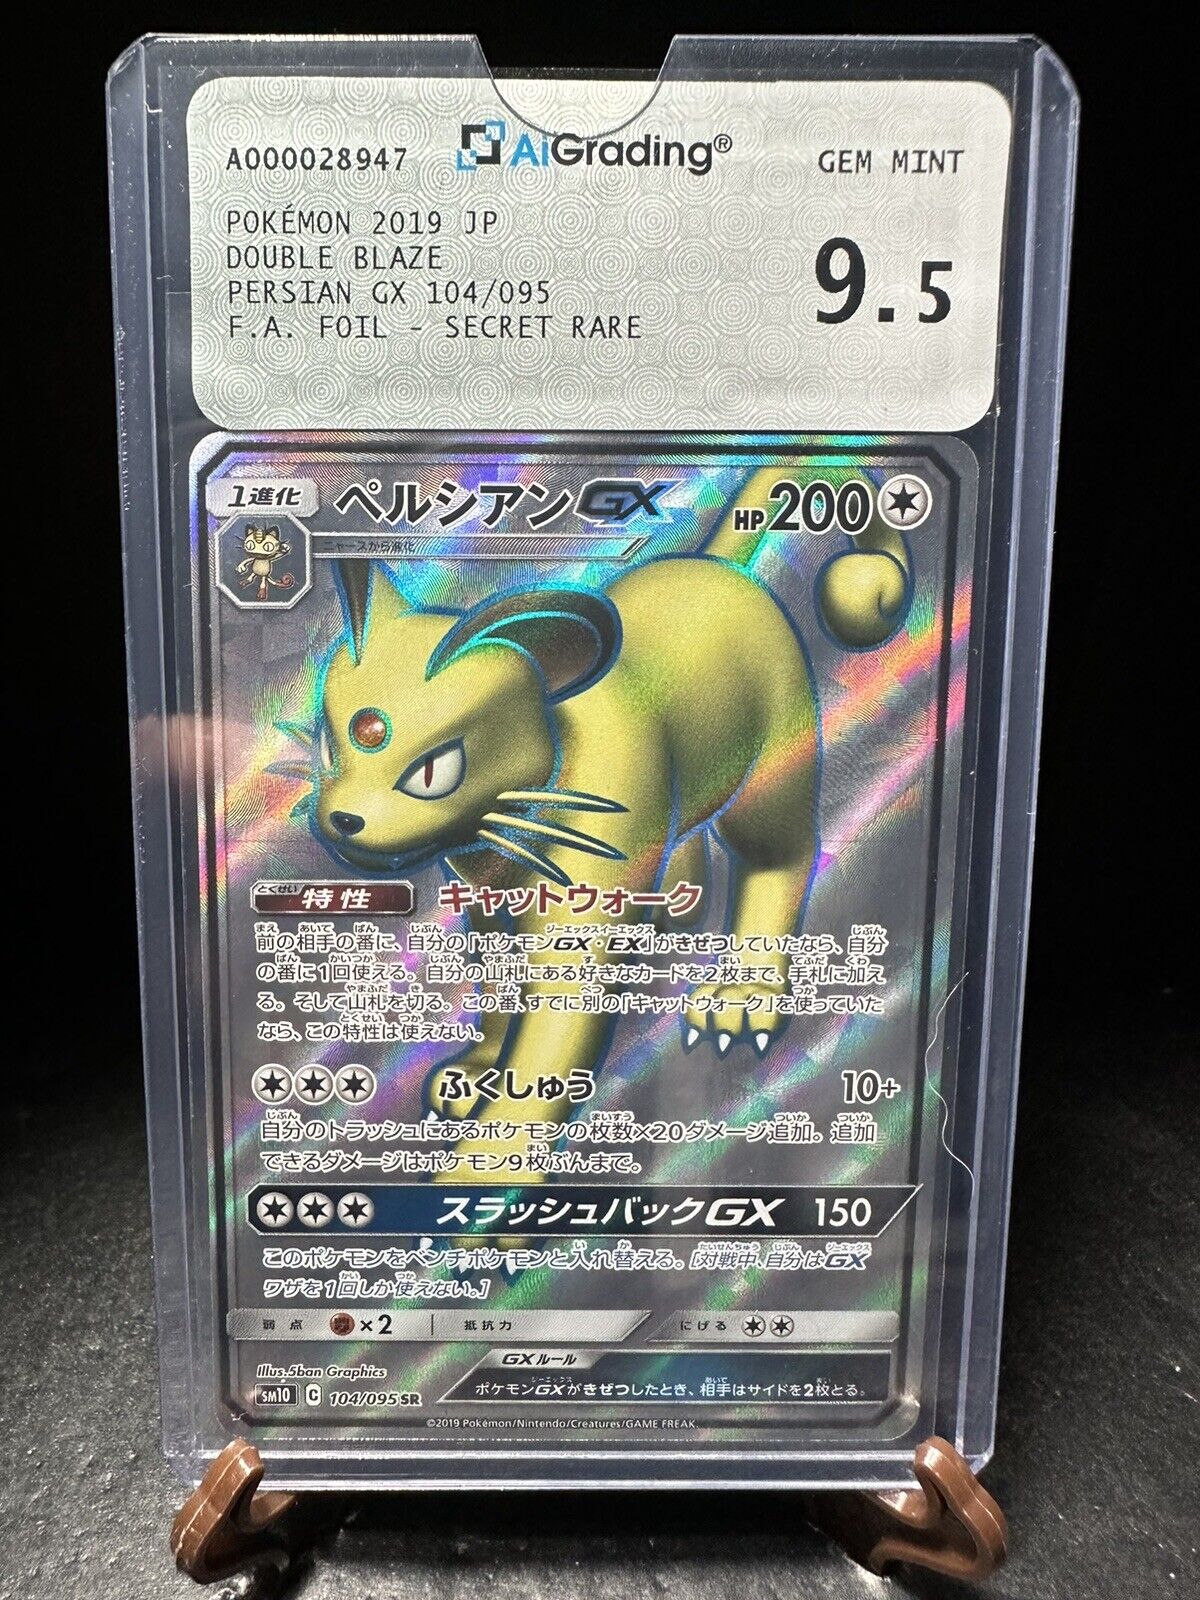 Pokemon - PERSIAN GX 104/095 Japan AiGrading9.5 Gem Mint (Psa9.5,Bgs9.5)